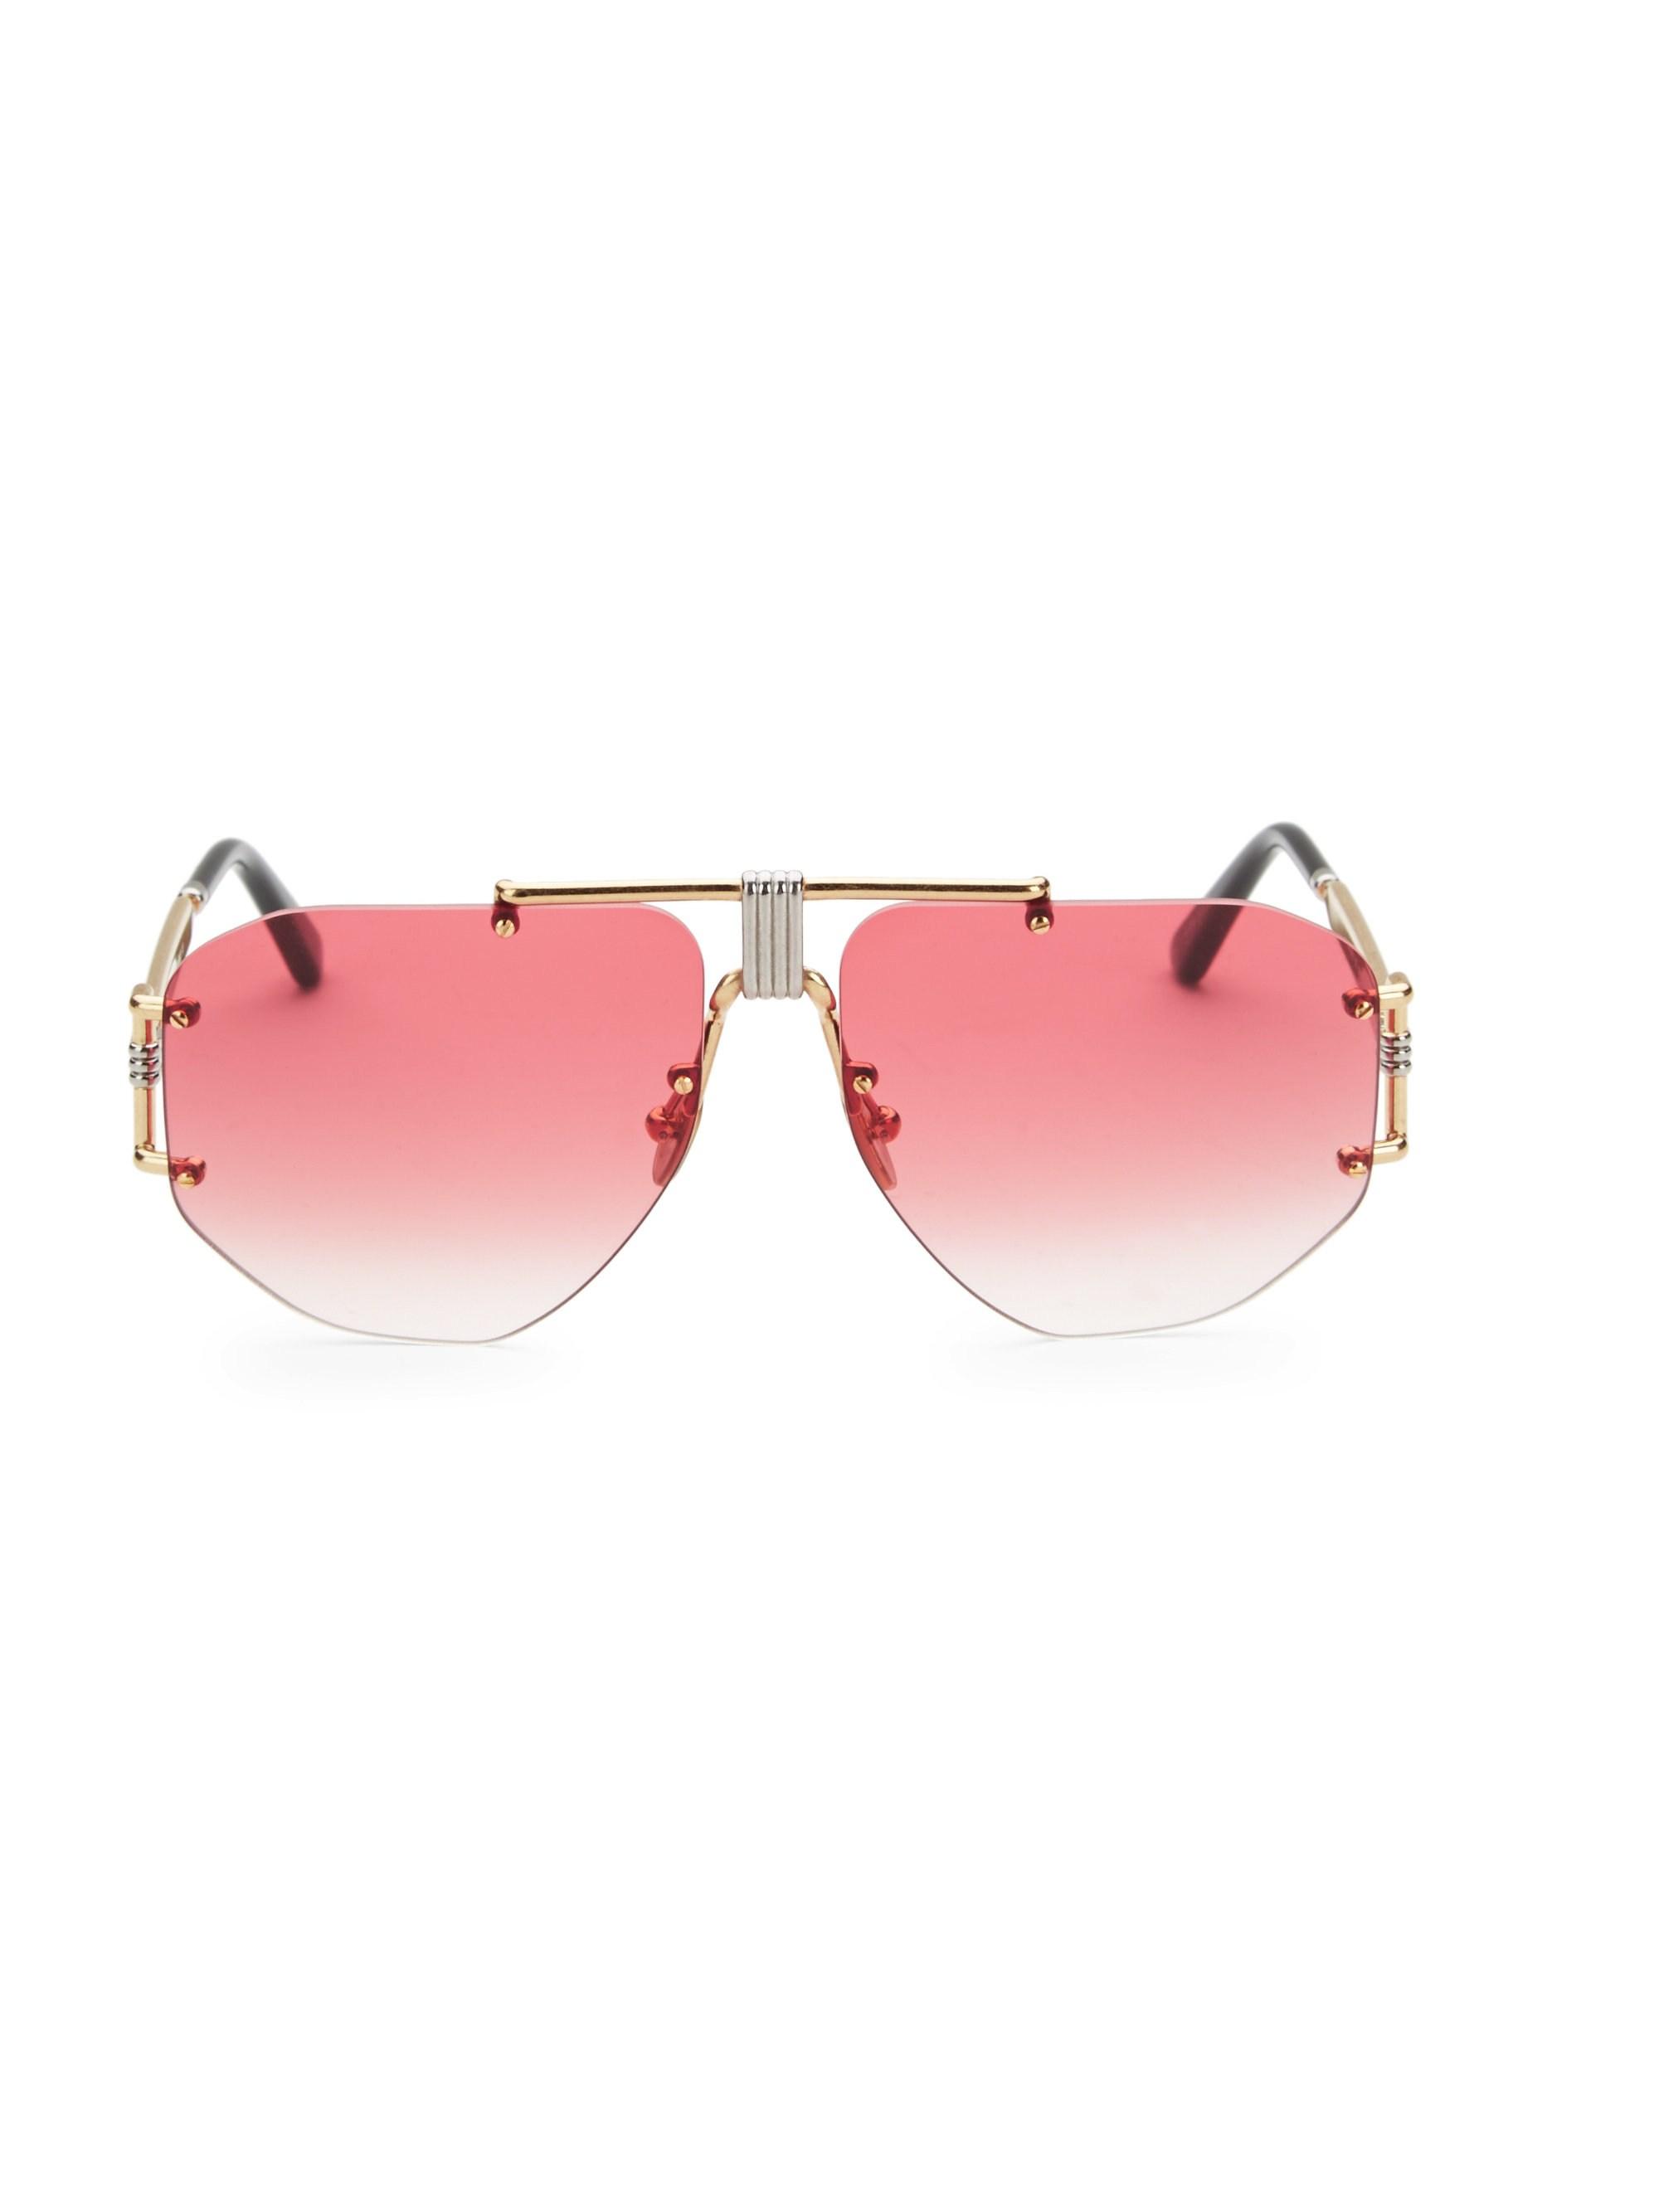 Celine Aviator Sunglasses in Pink | Lyst